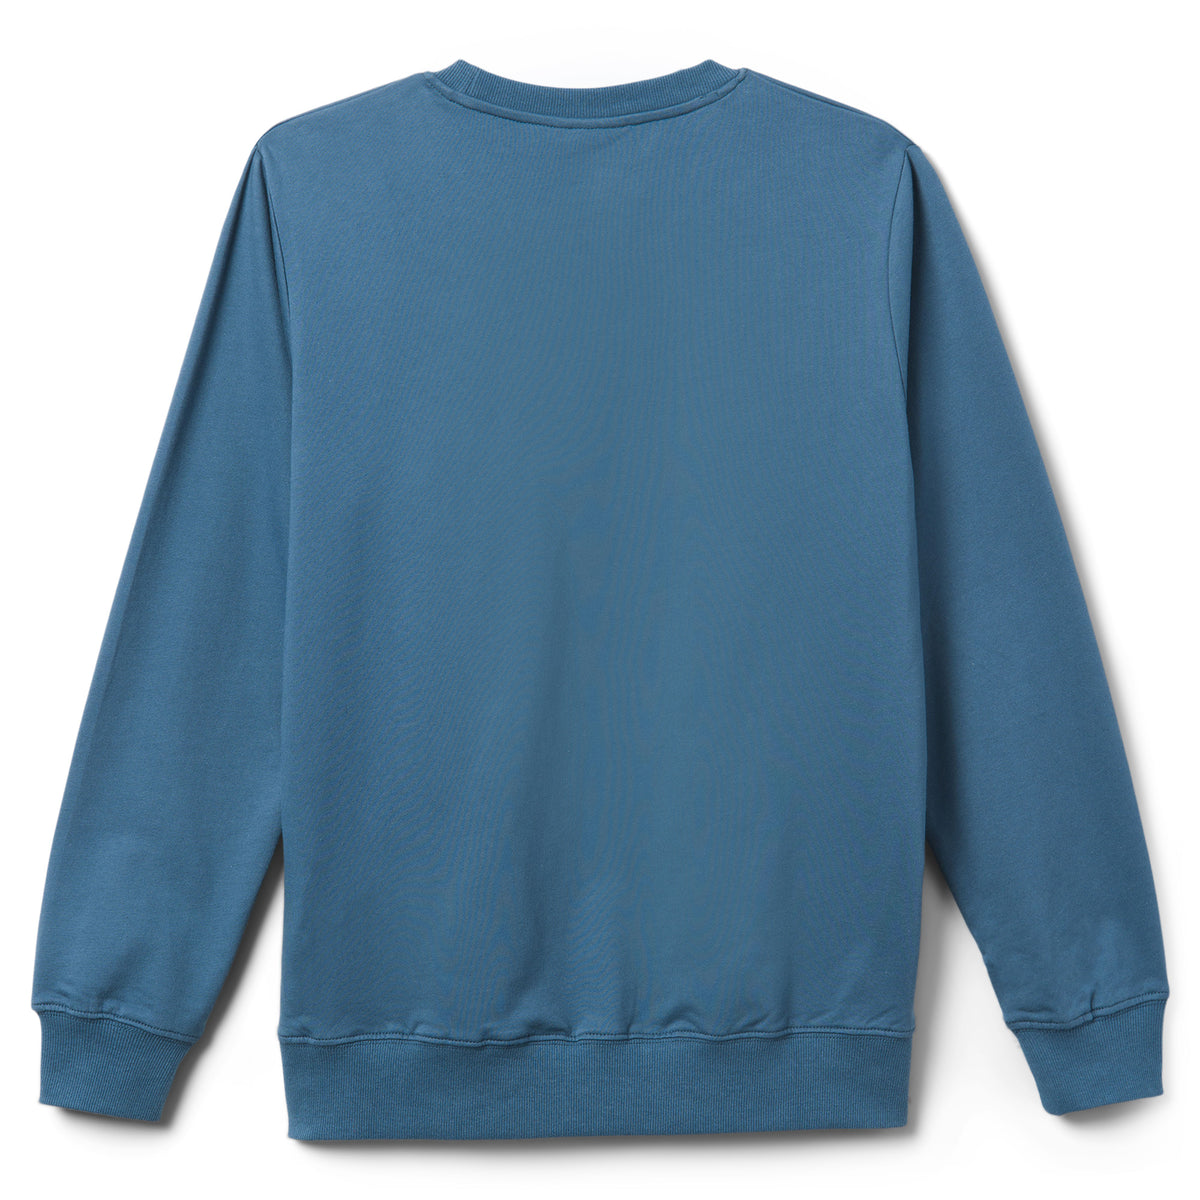 Keroppi &amp; Teru Teru Sweatshirt Blue Apparel Global License   